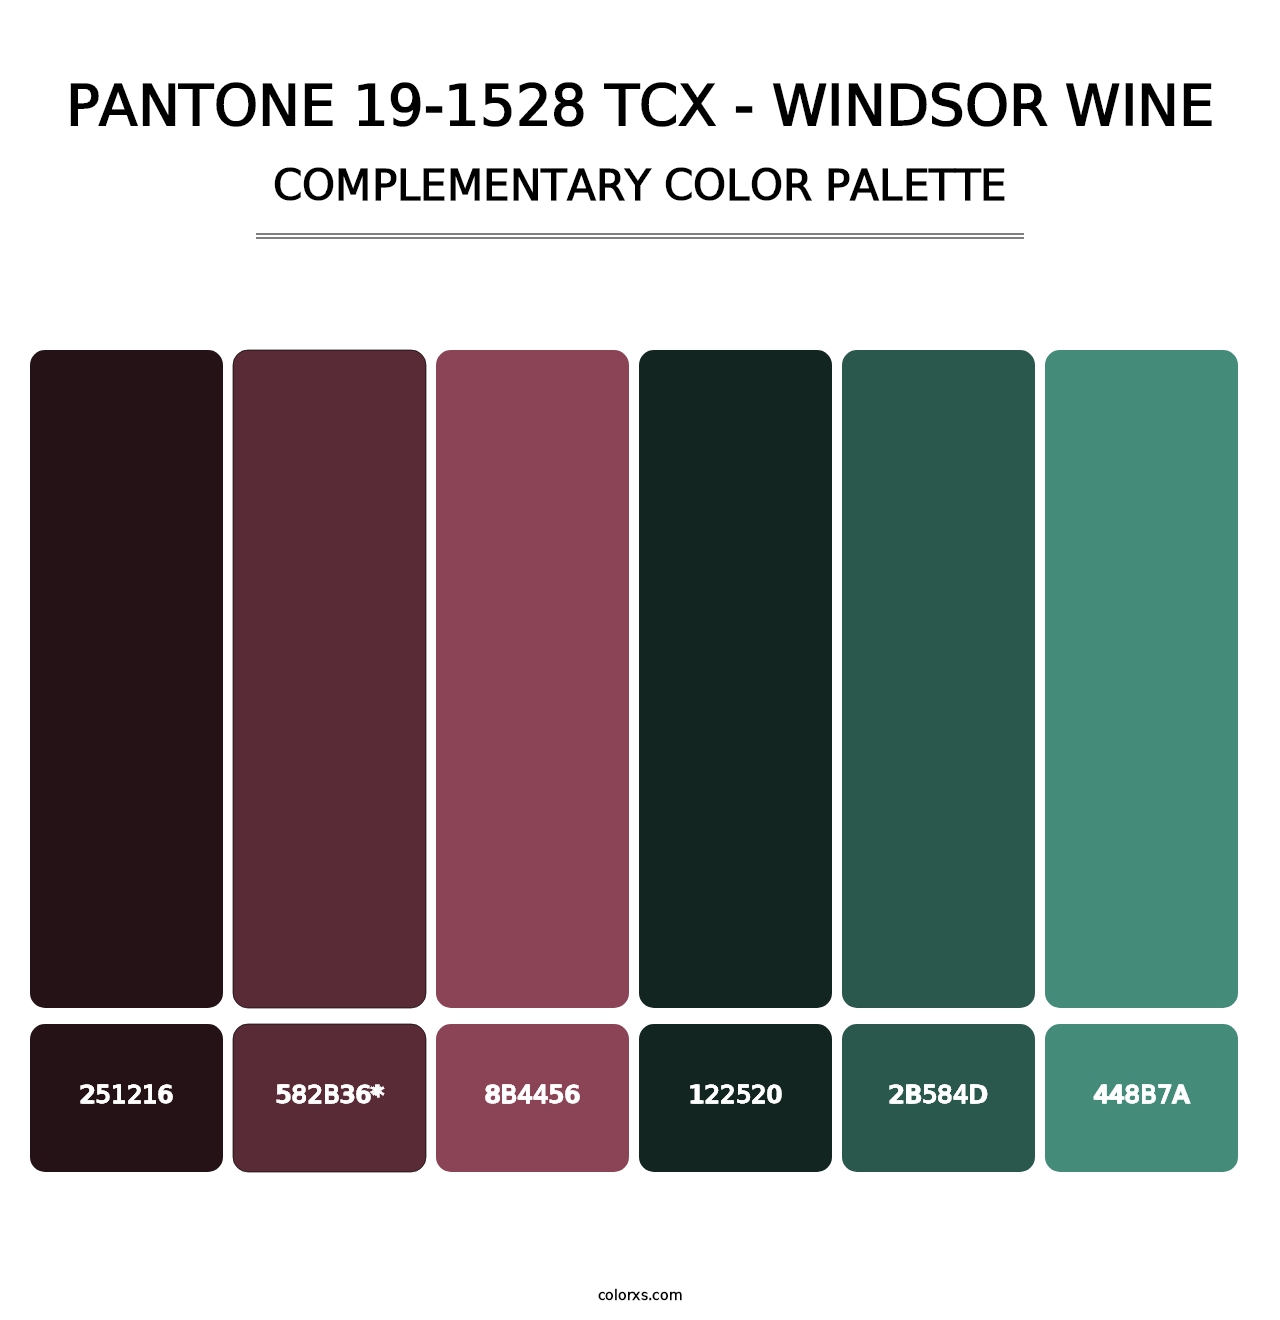 PANTONE 19-1528 TCX - Windsor Wine - Complementary Color Palette